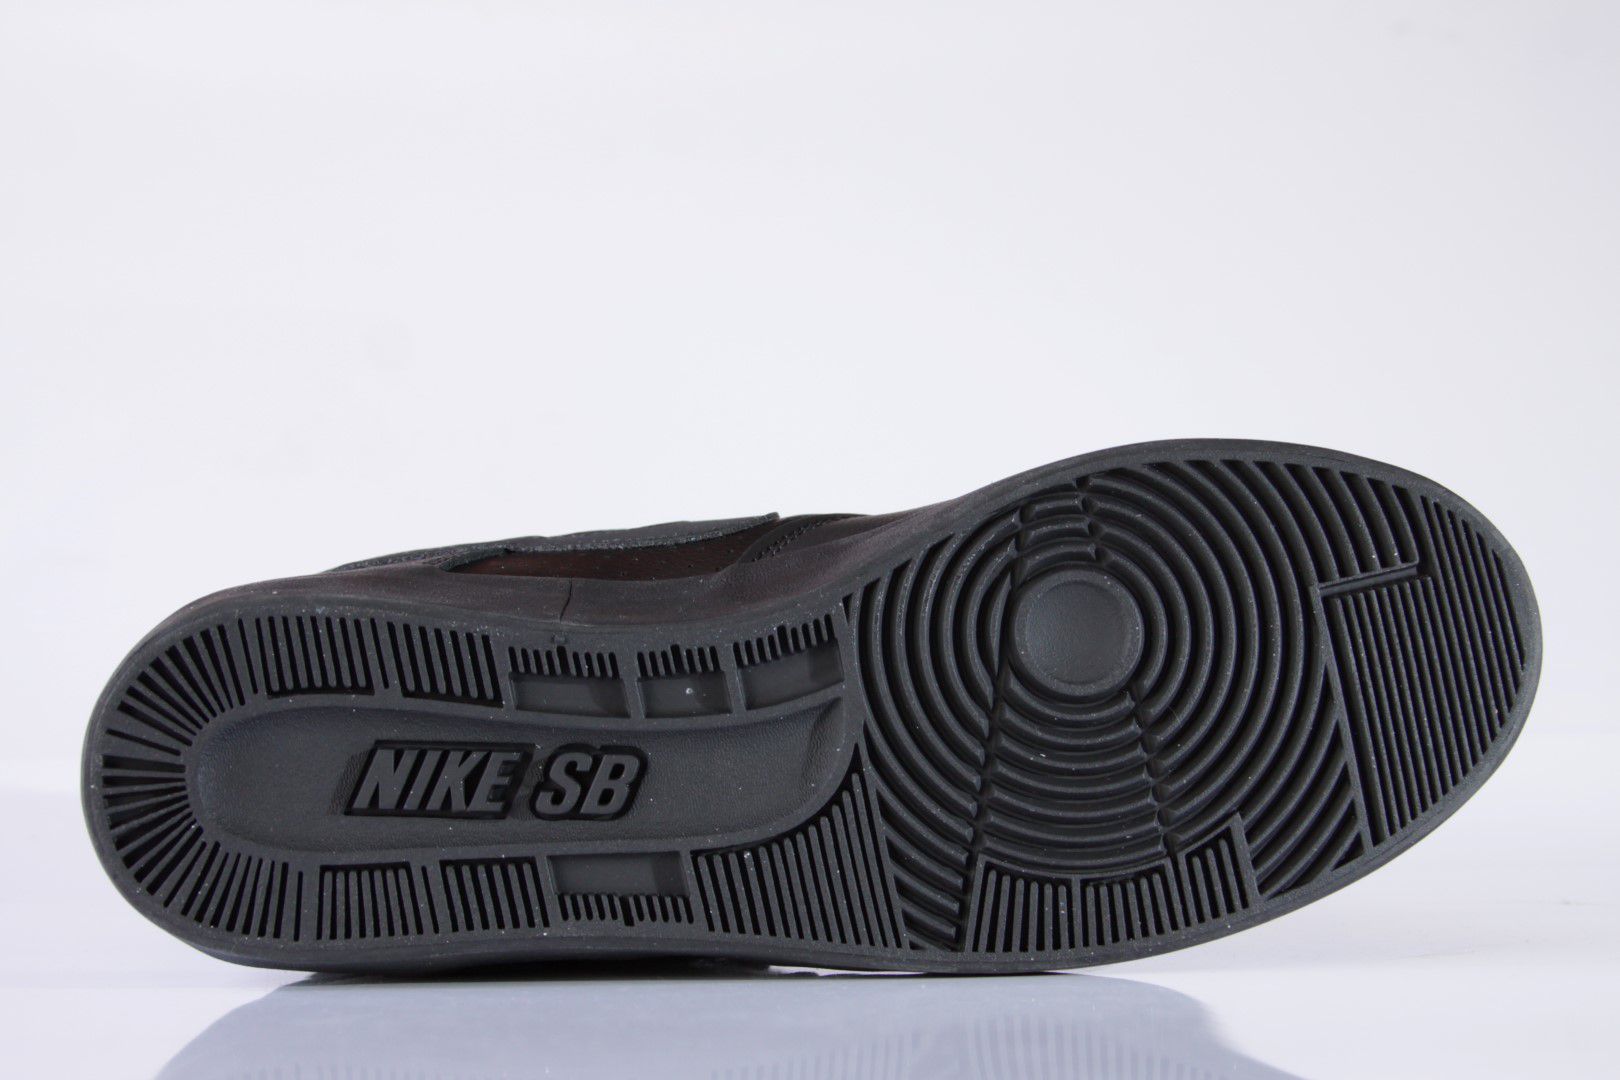 Tênis Nike SB - Zoom Delta Force Vulc Black/Black-Anthracite  - No Comply Skate Shop